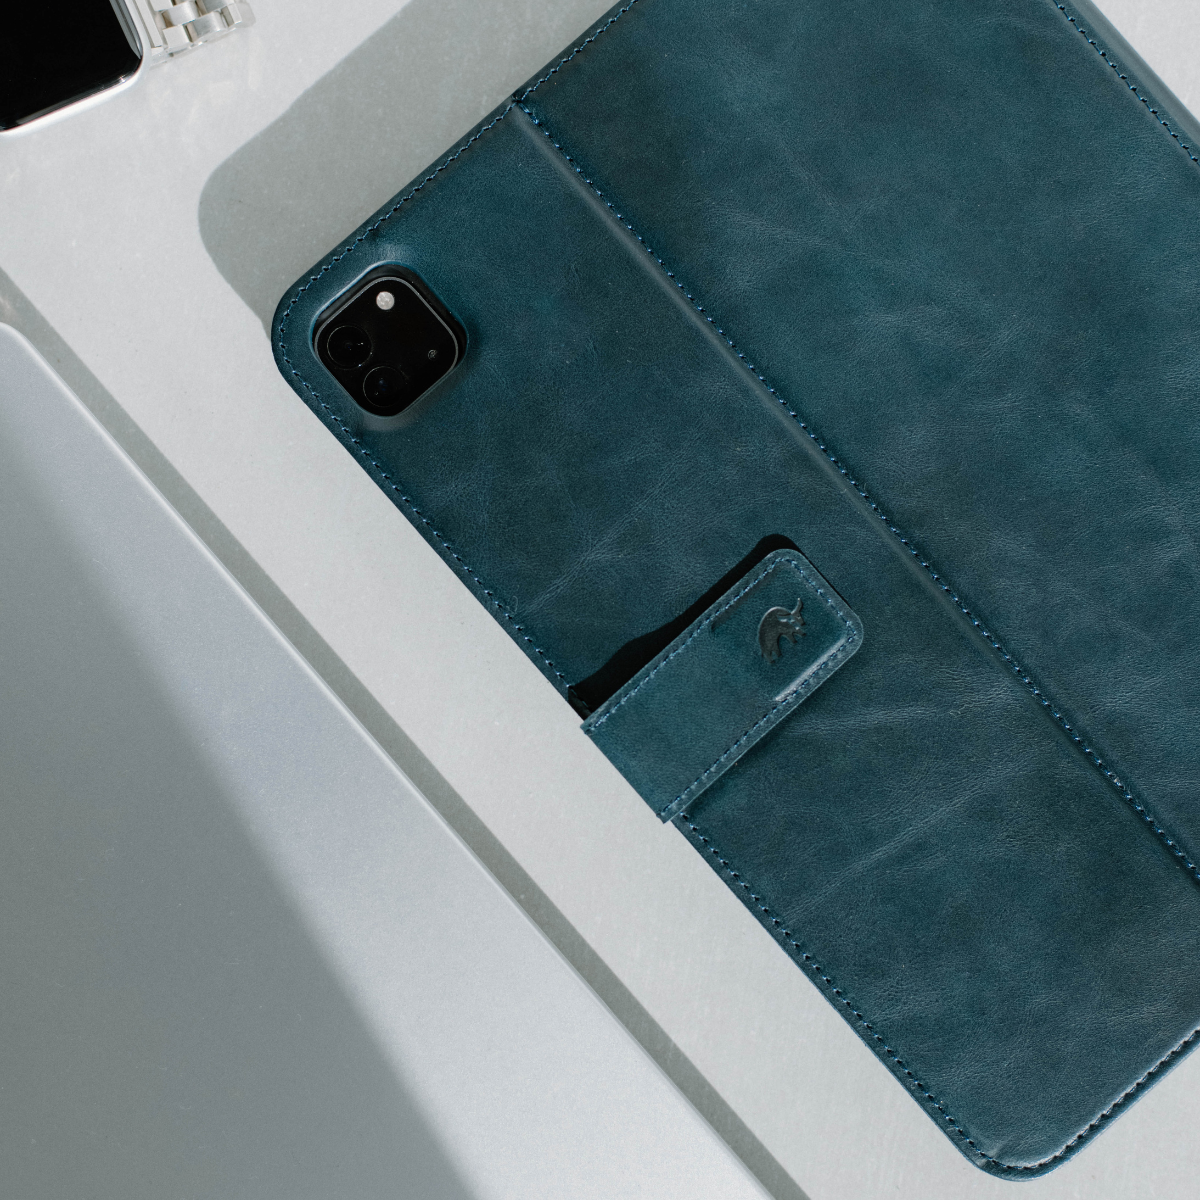 Leather iPad Case - OCEAN